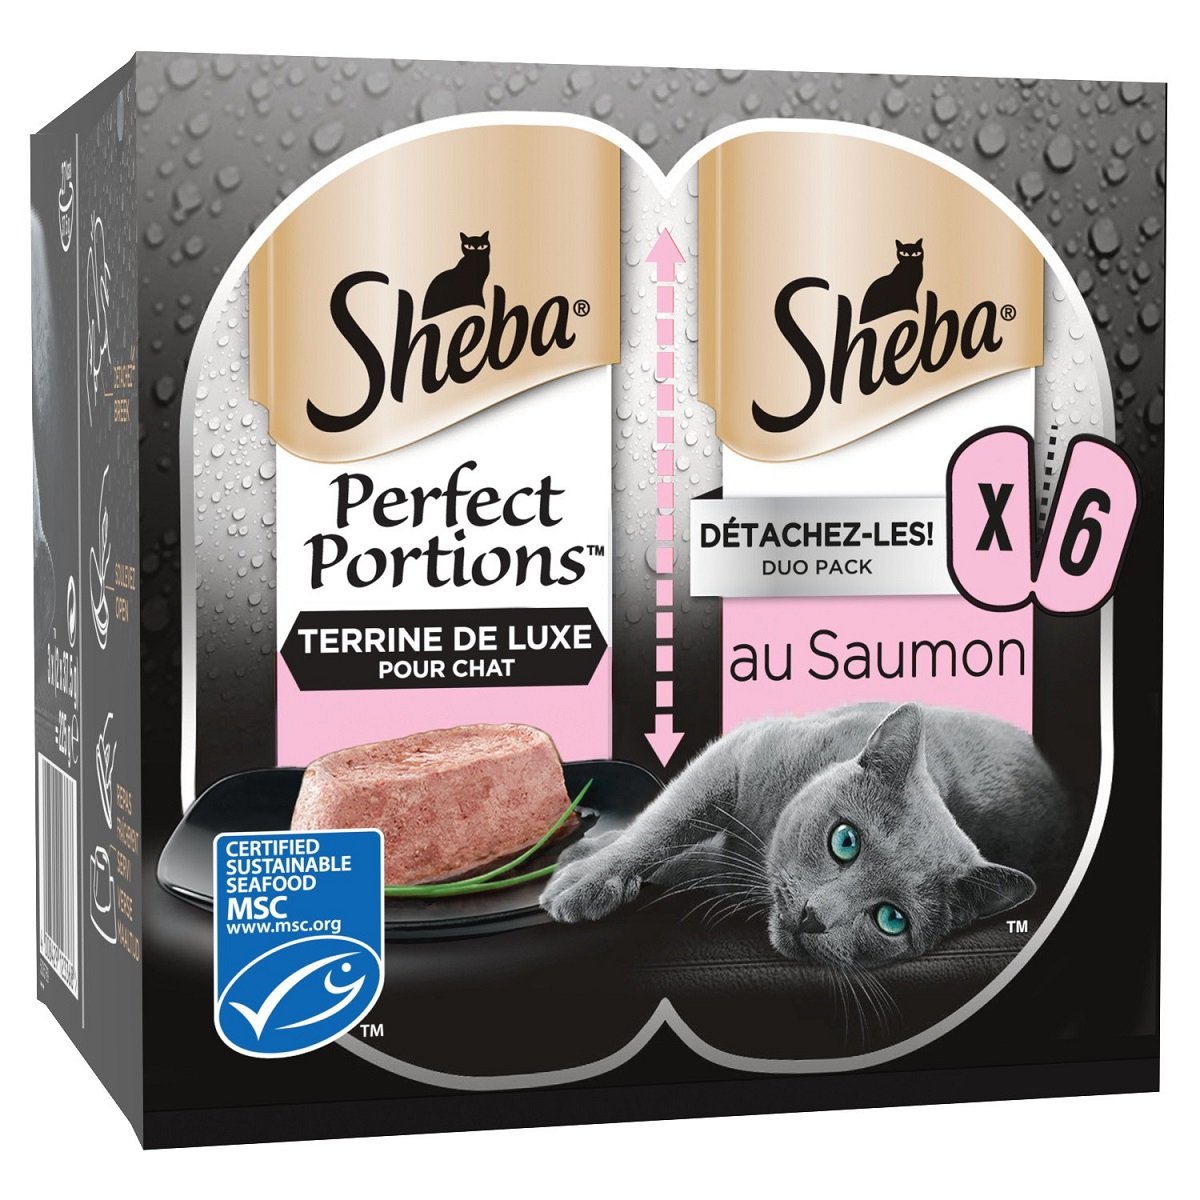 SHEBA Perfect Portions Patè per gatti de Luxe al salmone